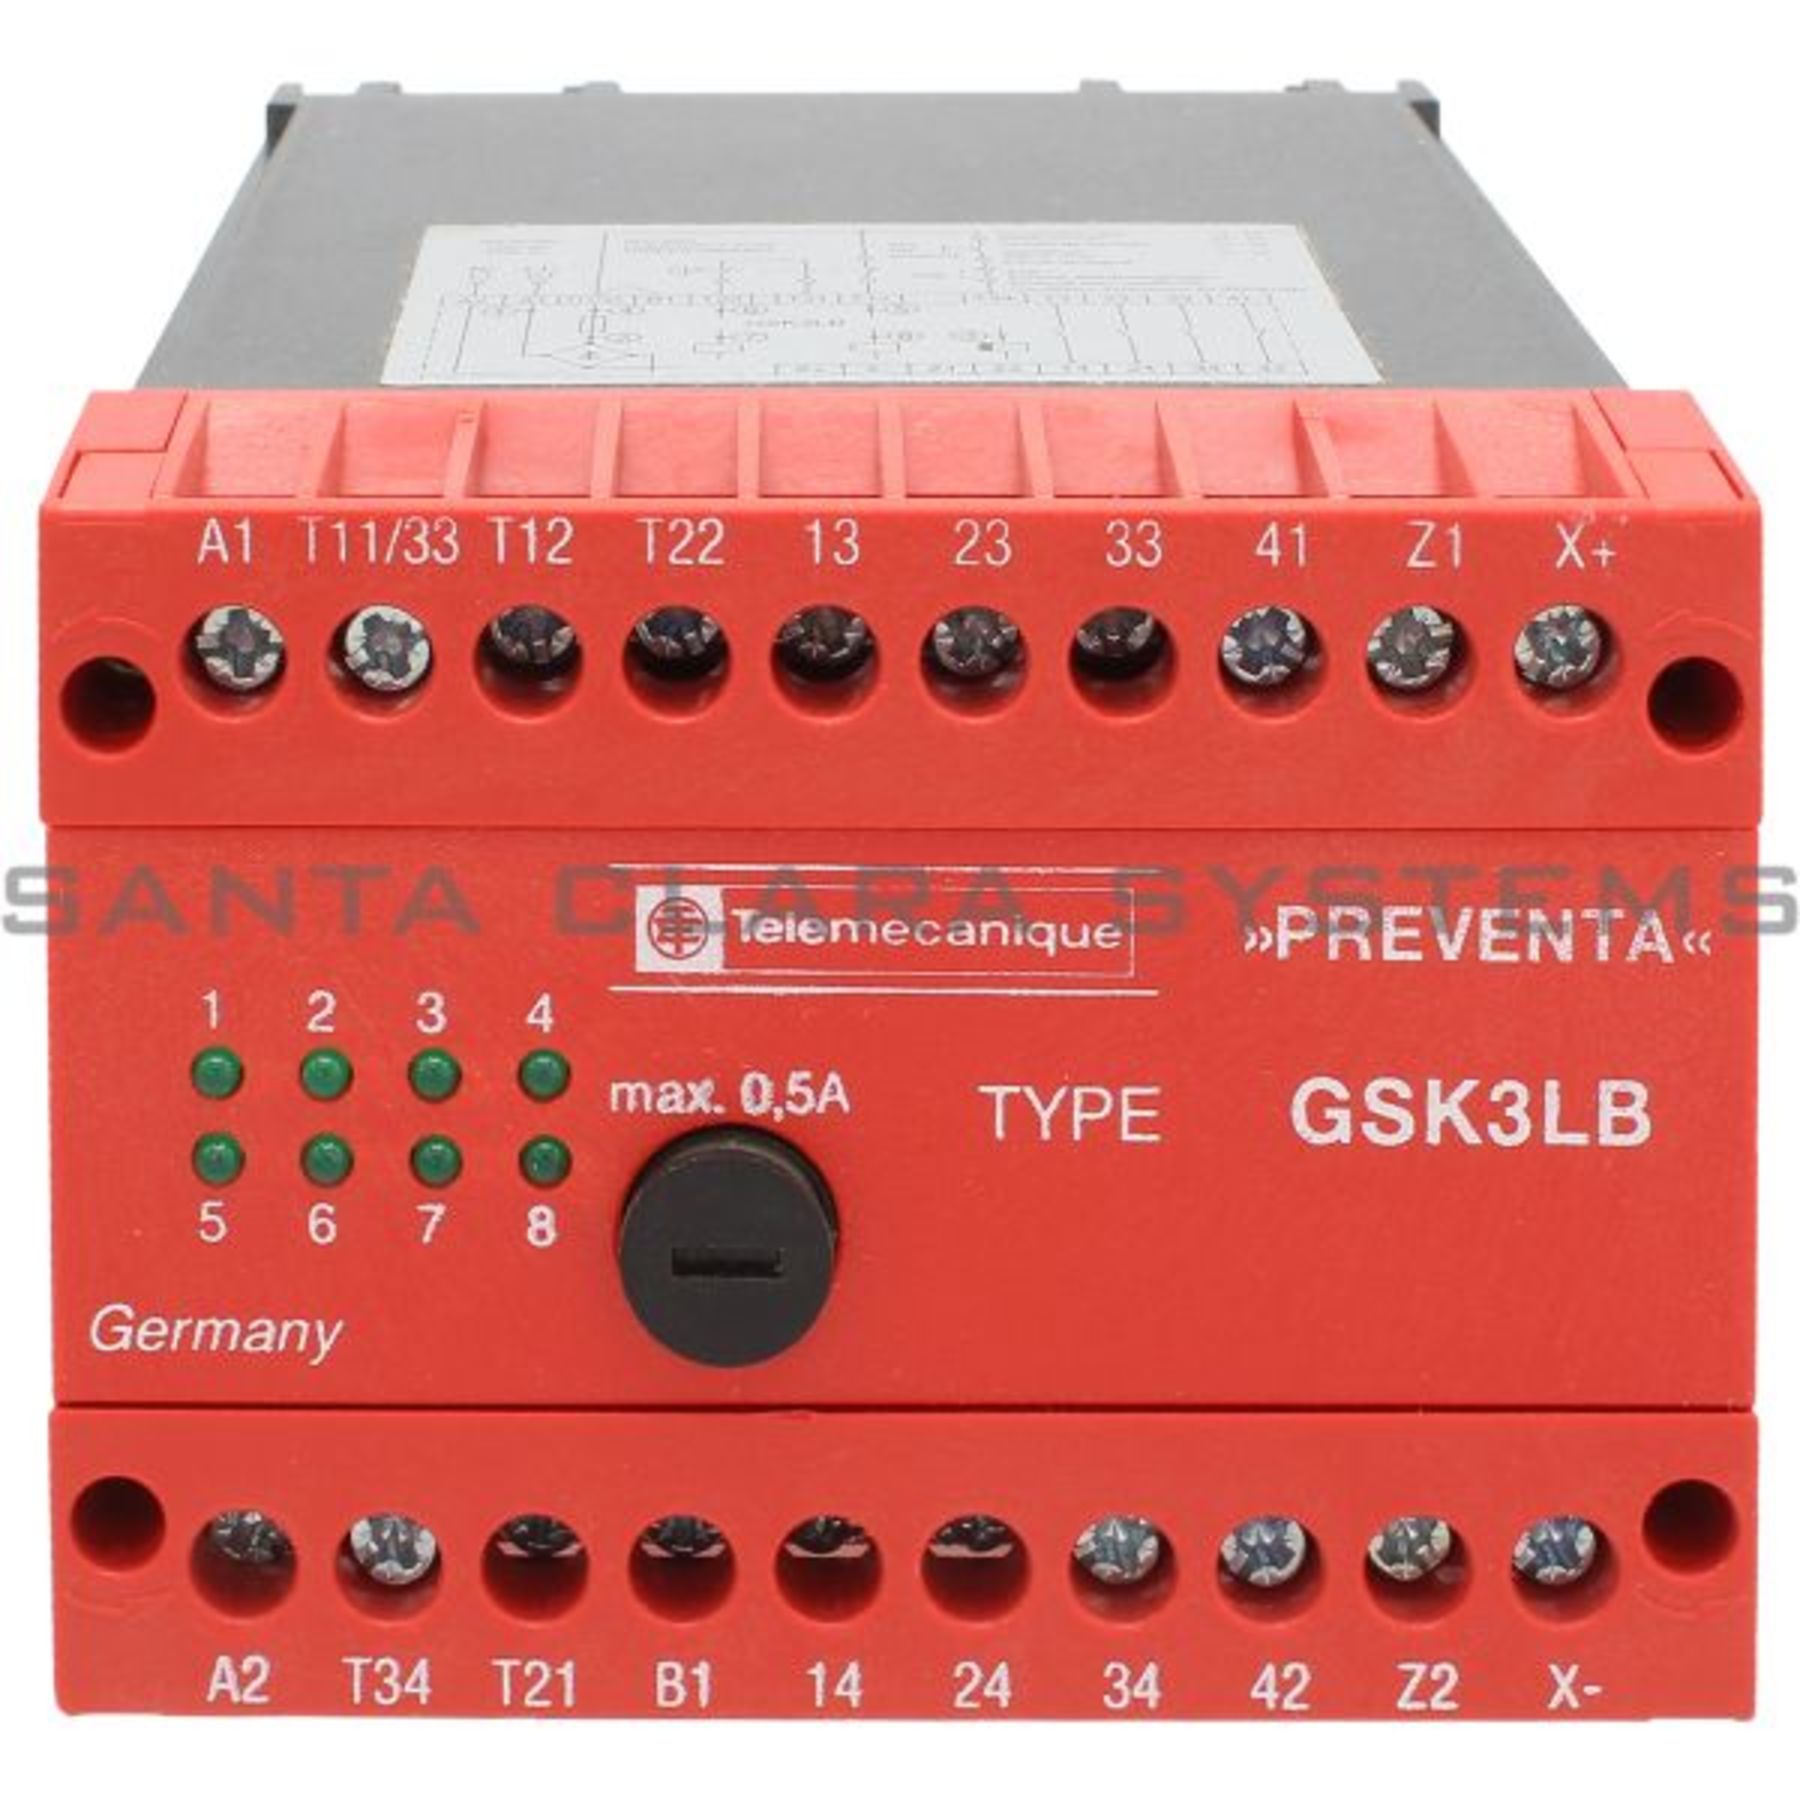 Details about   GSK3LB/Seriec Telemecanique Safety Relay